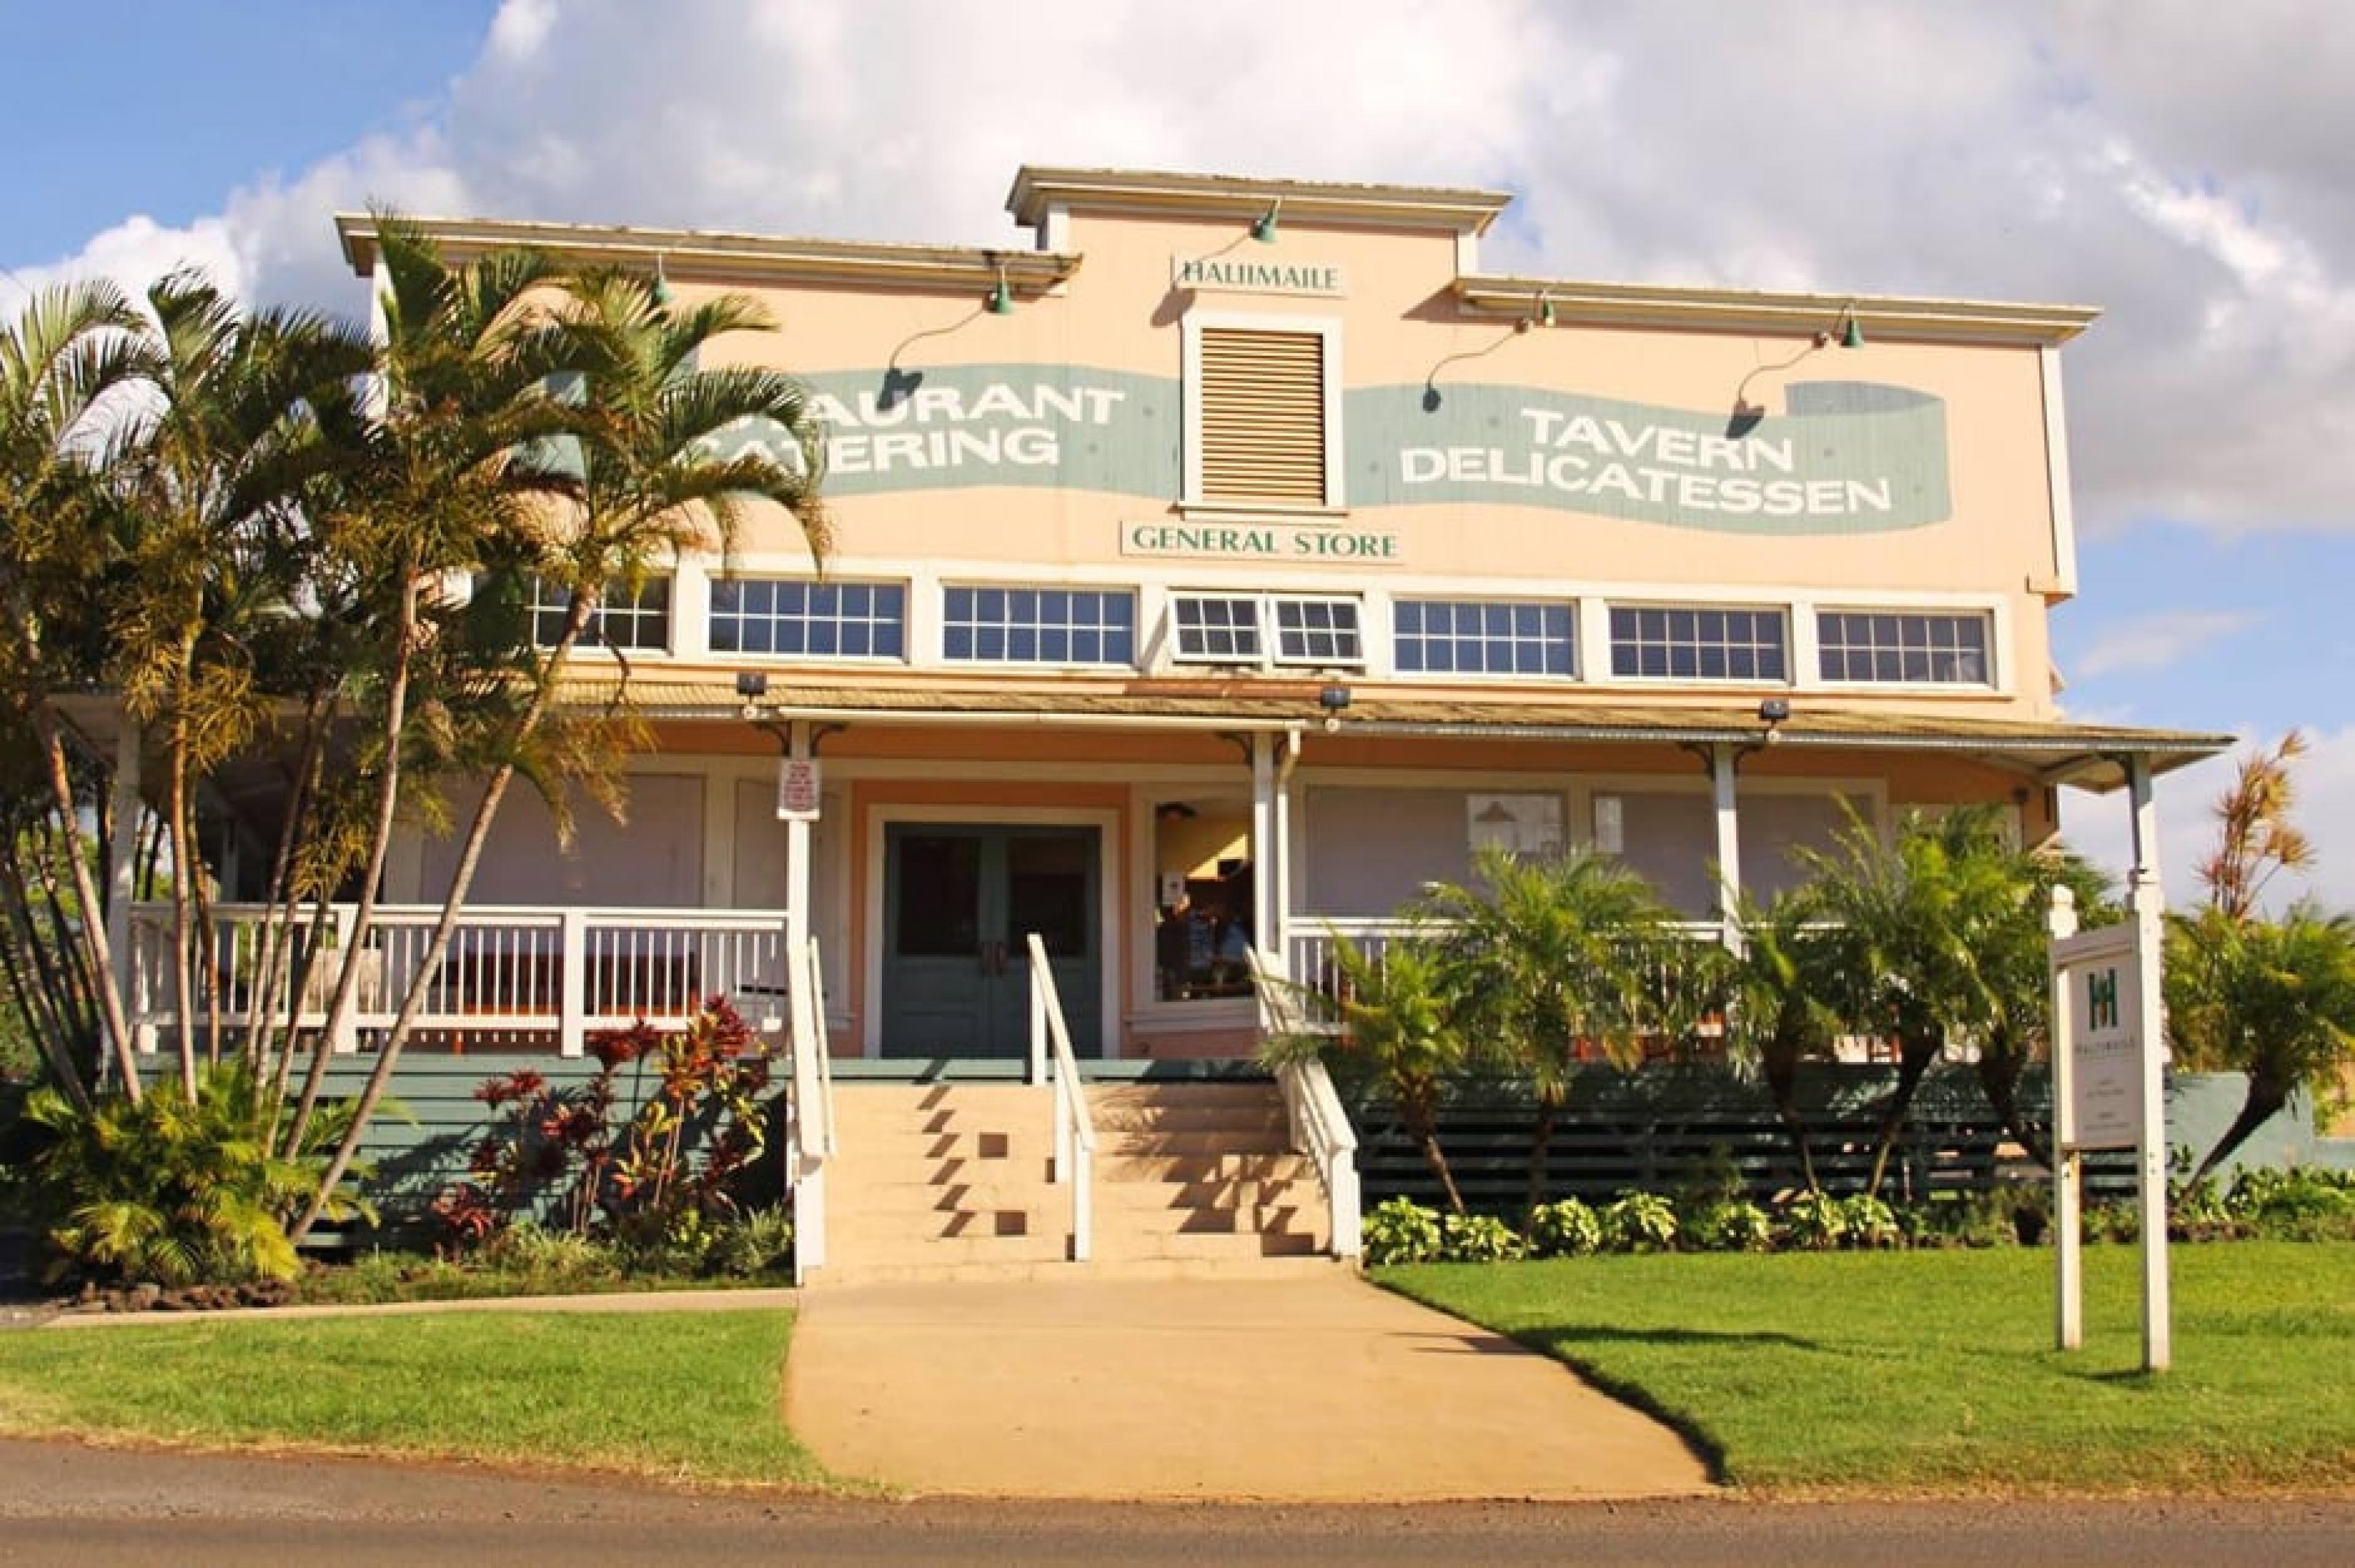 Exterior View - Hali’imaile General Store, Maui, Hawaii